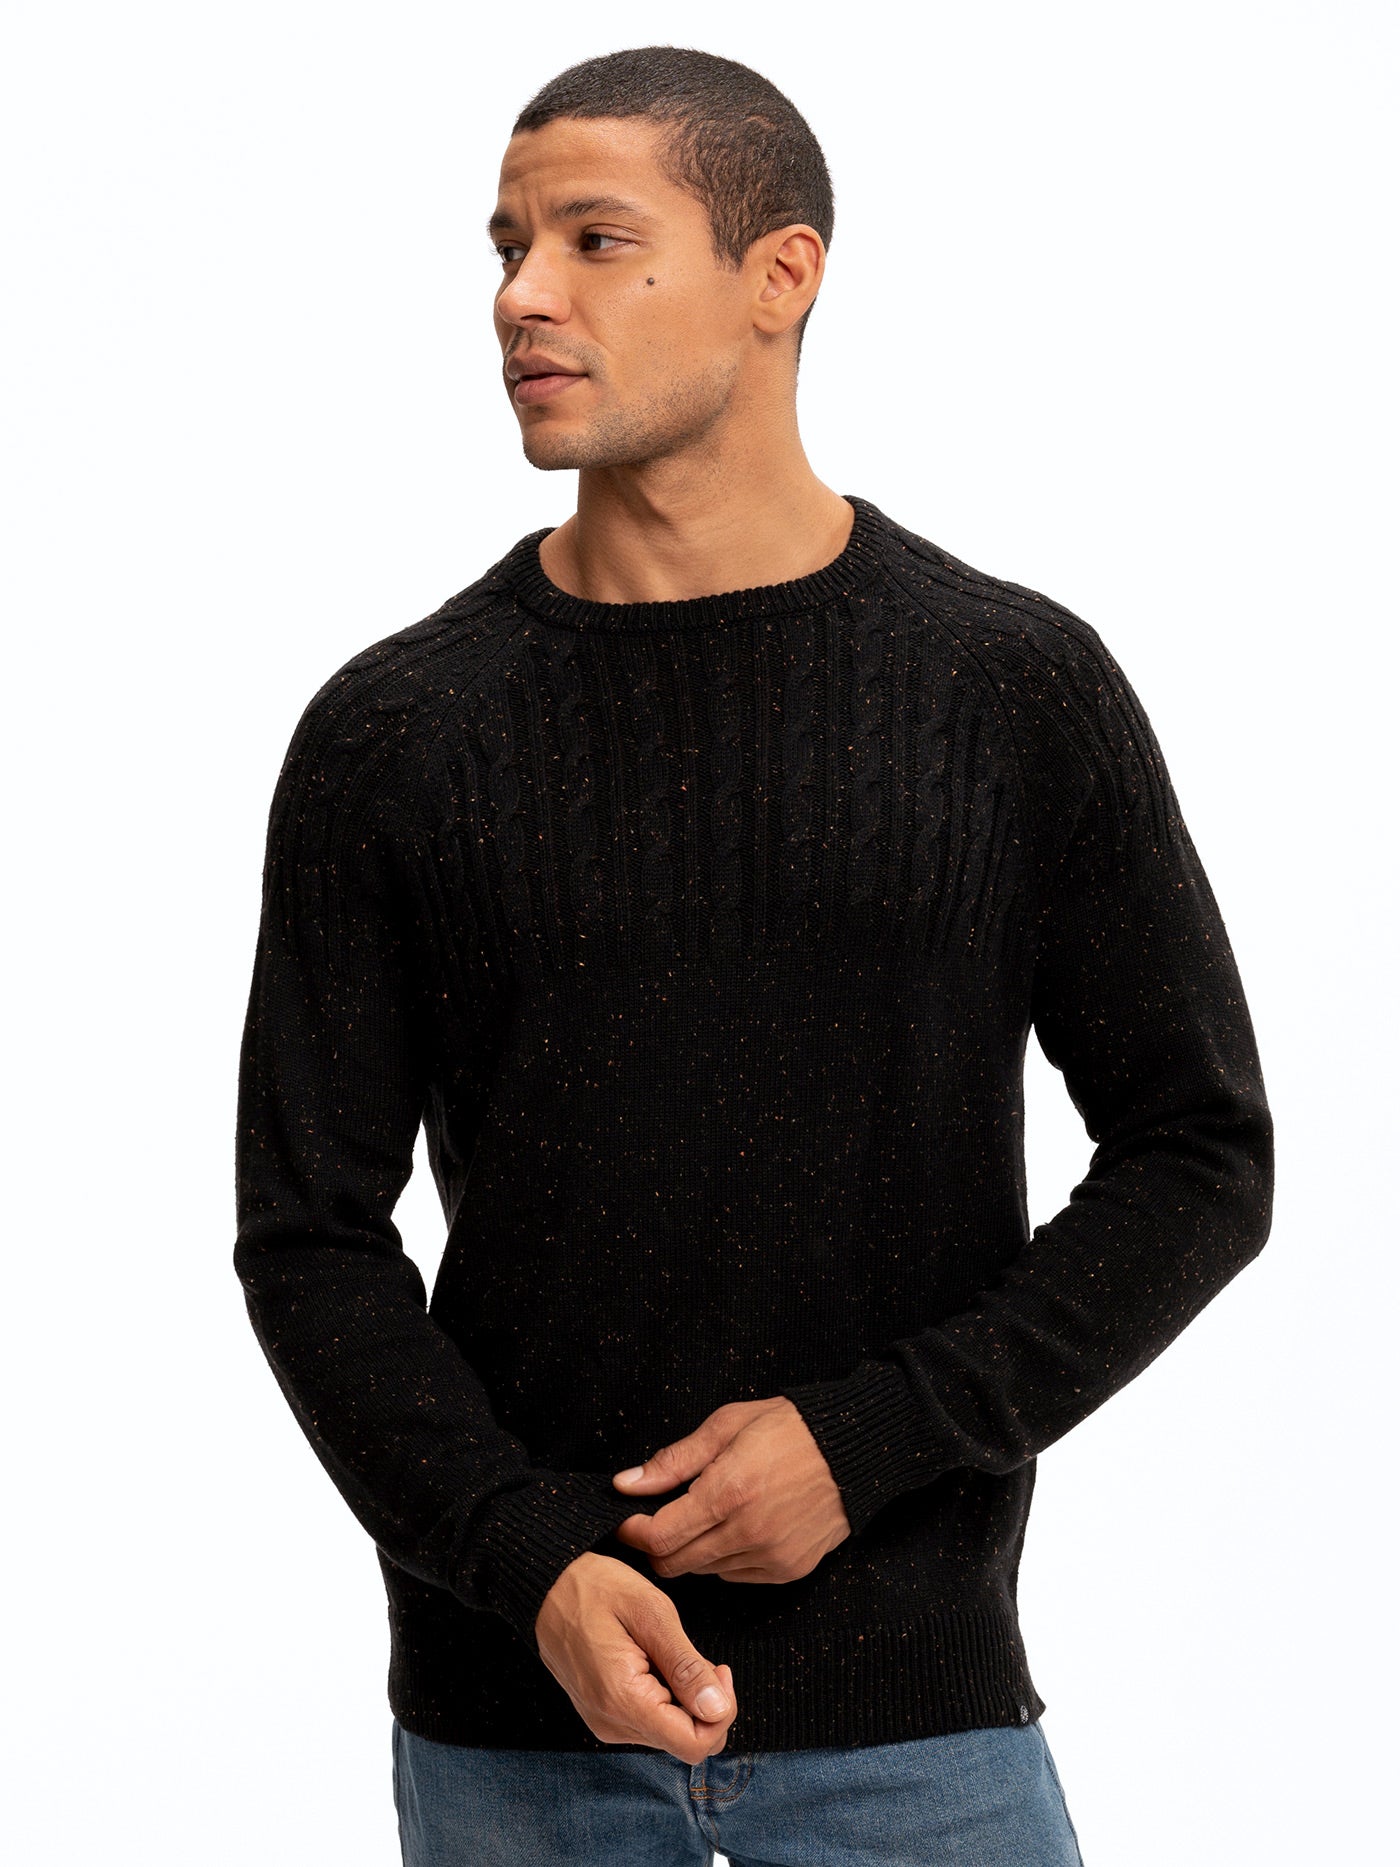 Fleck Knit Raglan Crew Sweater Mens Outerwear Sweater Threads 4 Thought 